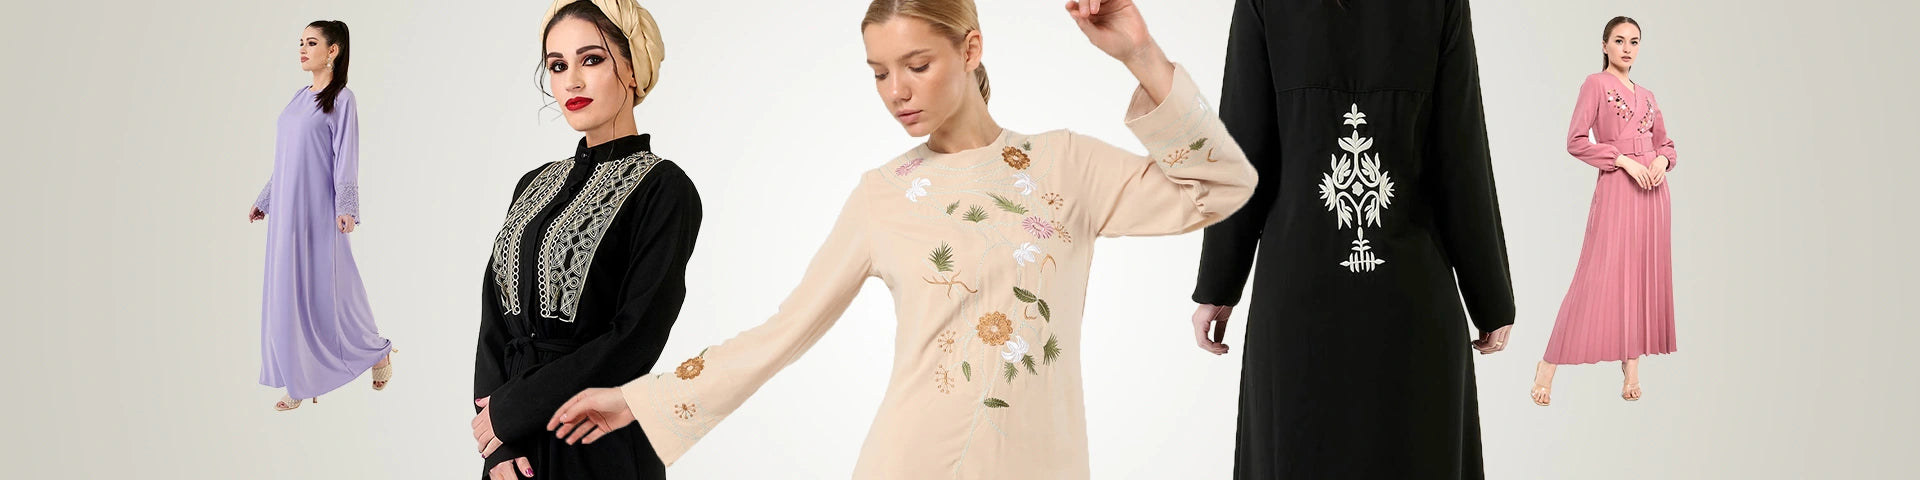 Embroidered Dresses uk